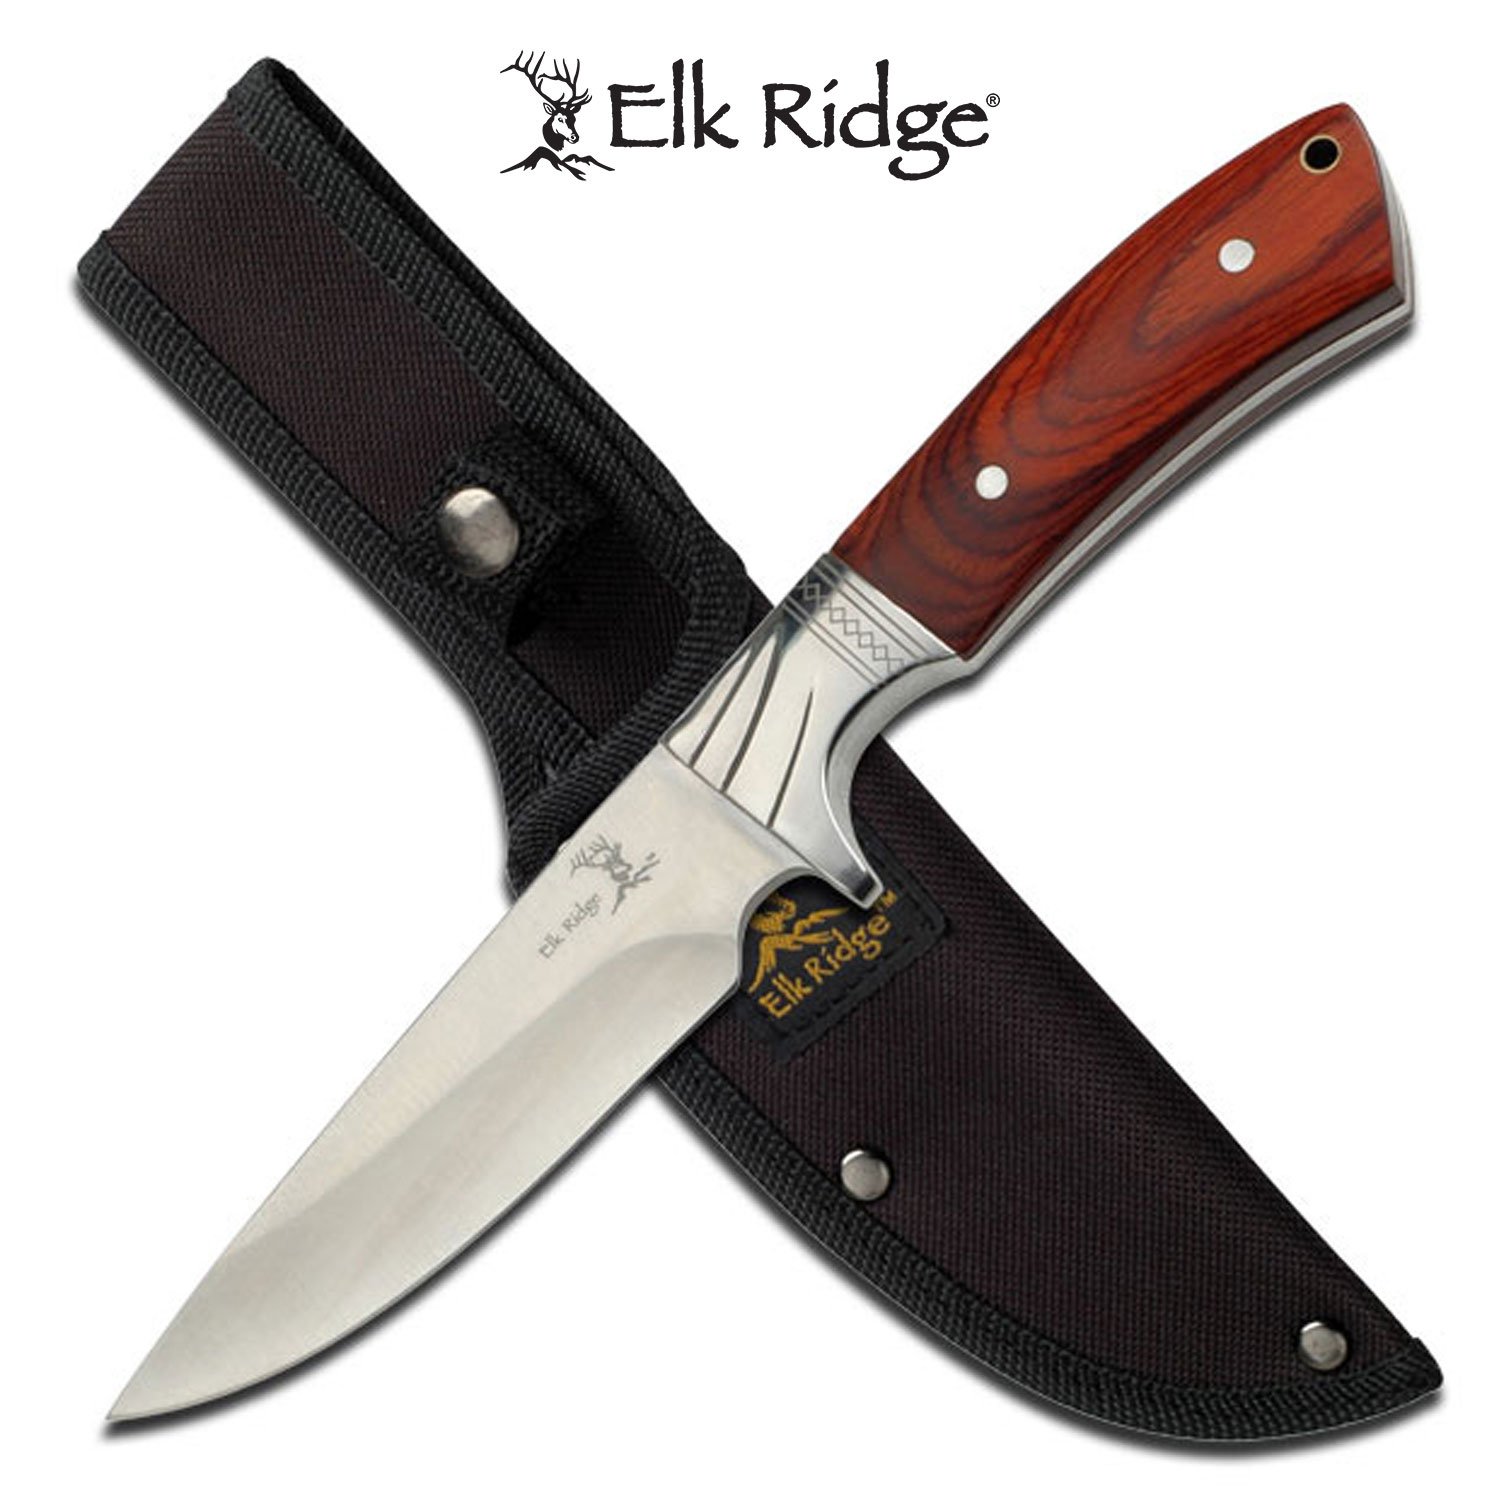 ELK RIDGE knife 9